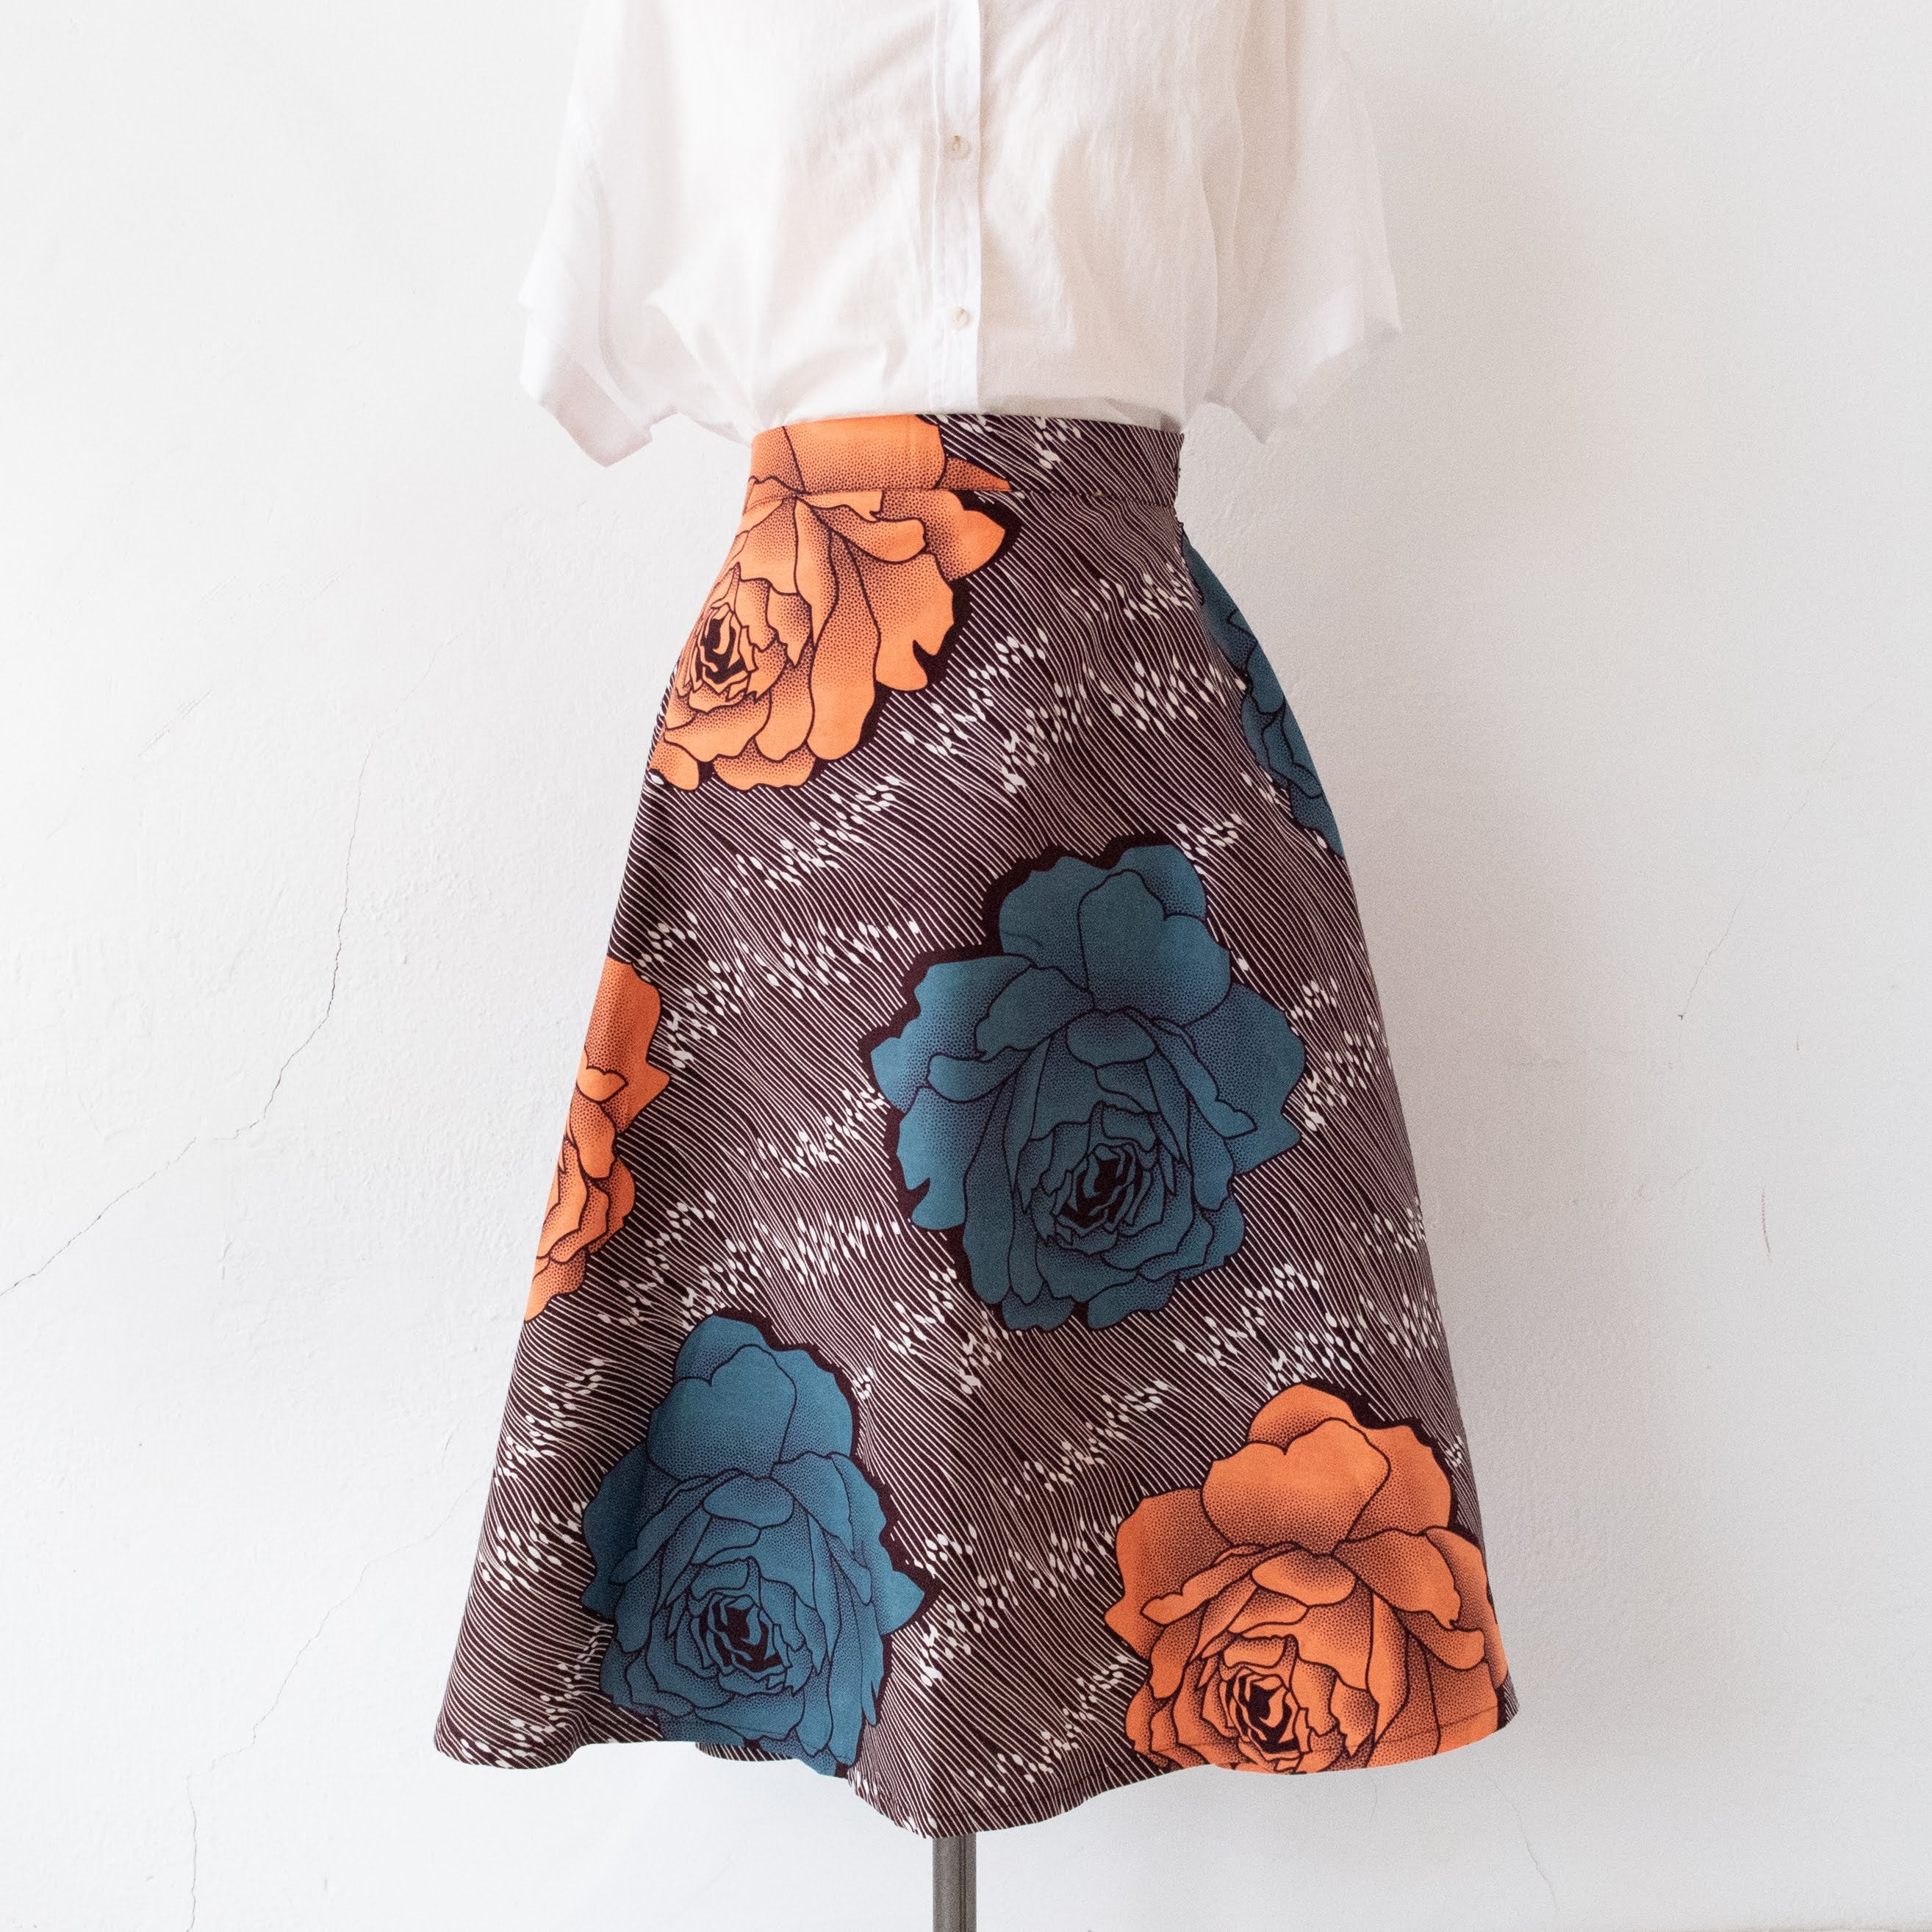 Classic A-line Skirt - Kenyan materials and design for a fair trade boutique